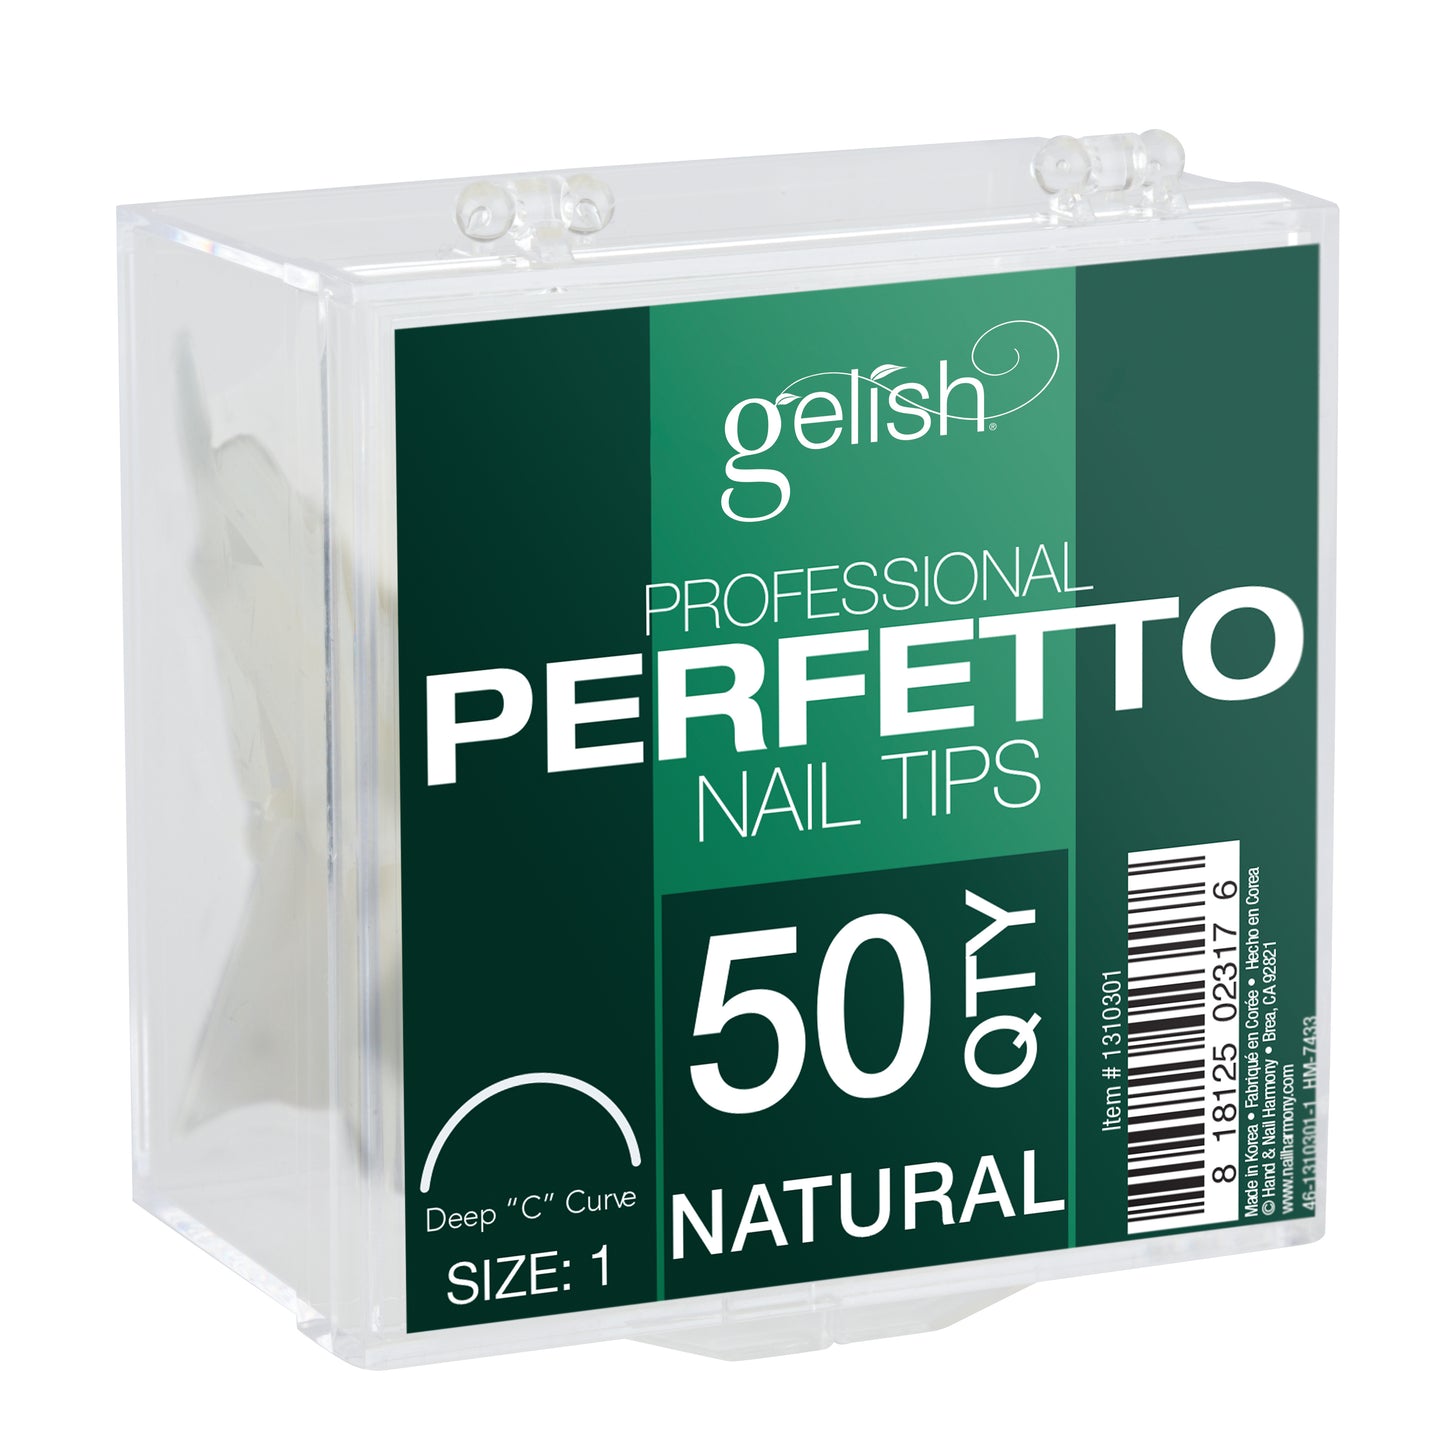 Gelish ProHesion Perfetto Nail Tips, 50 ct Refill, Natural